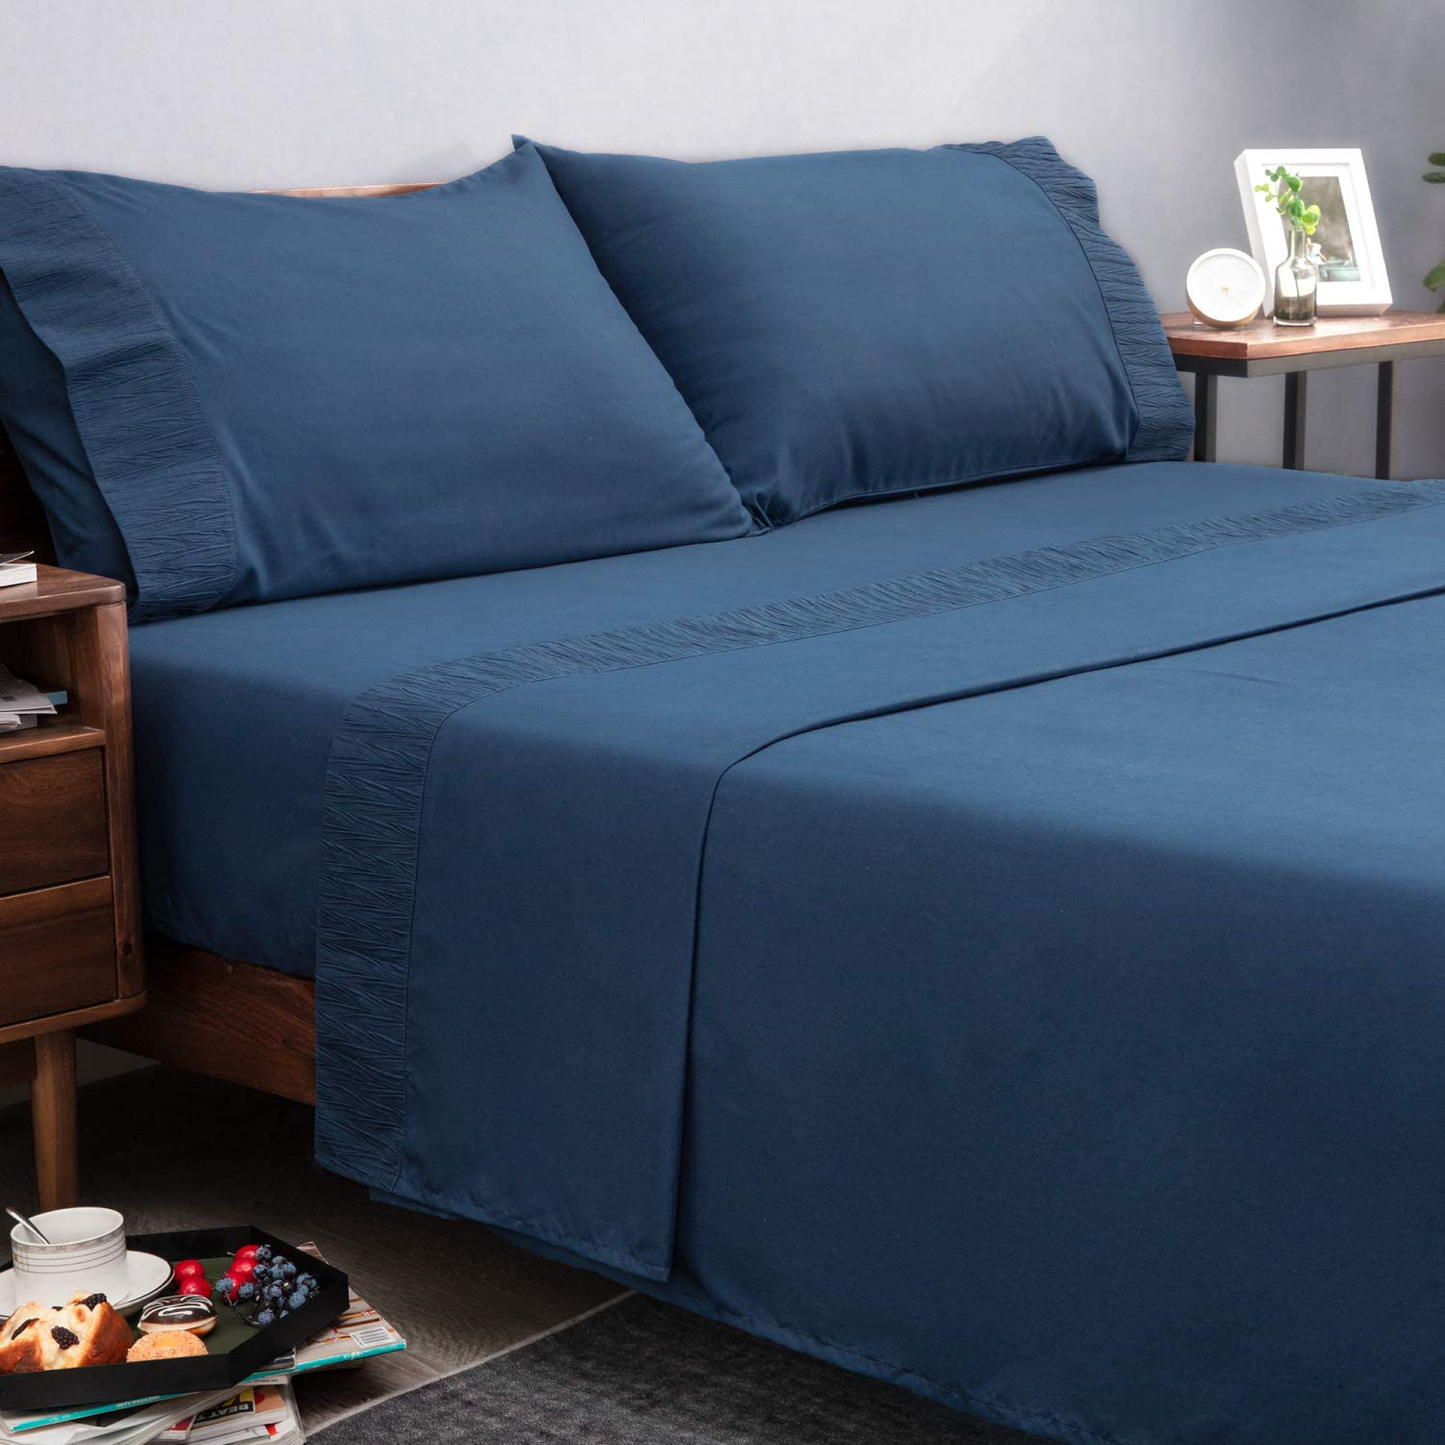 Bedsure Soft 1800 Bedding Sheets & Pillowcases Set